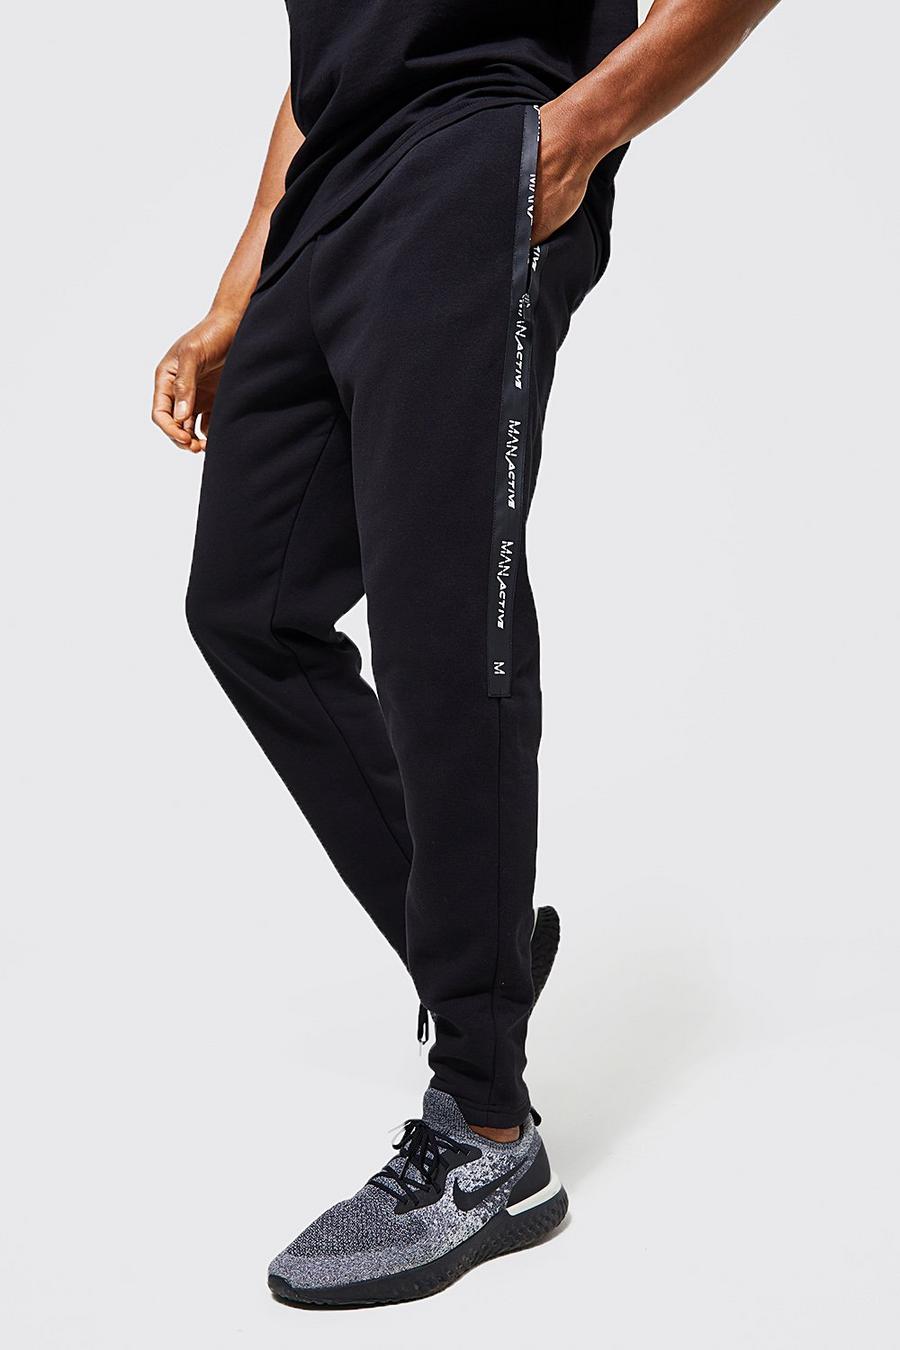 Pantaloni tuta Man Active Gym con zip, Nero image number 1